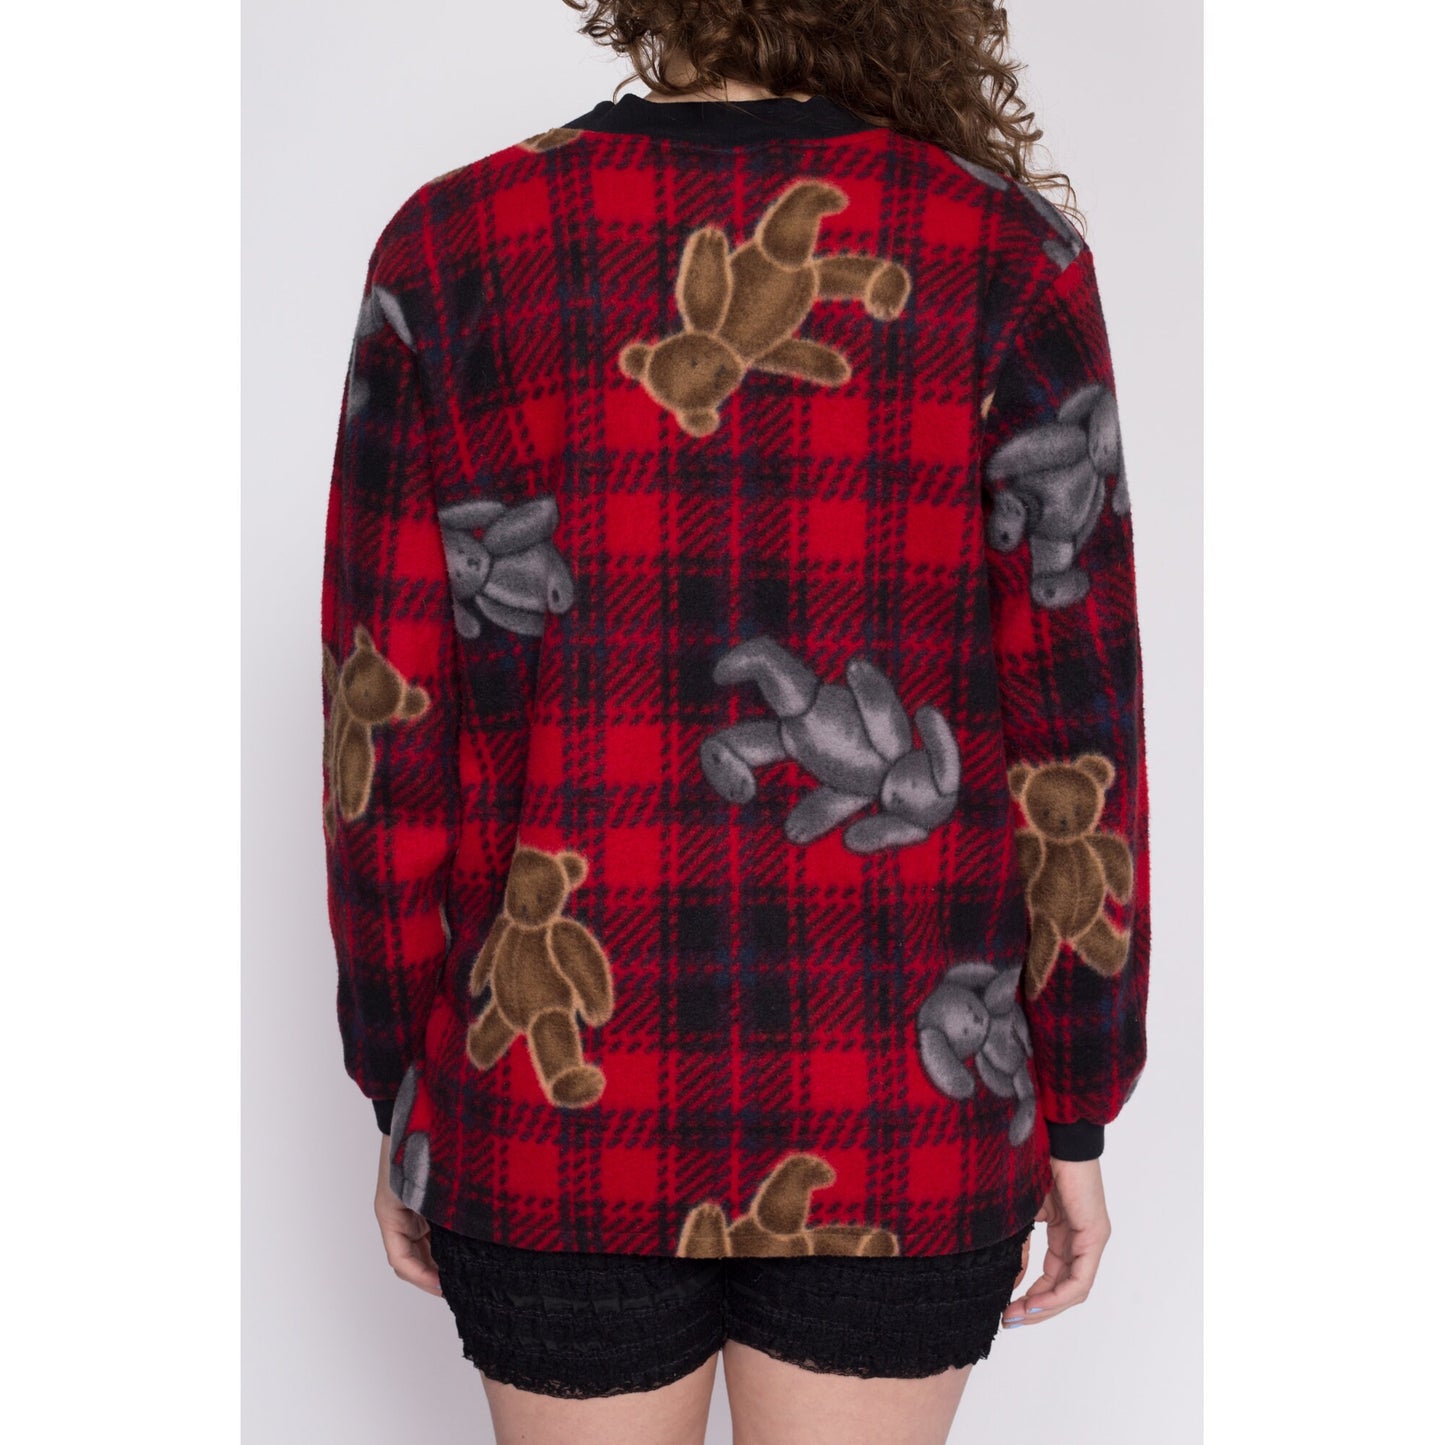 Medium 90s Teddy Bear Fleece Pajama Top | Vintage Red & Black Plaid Soft Sleep Shirt